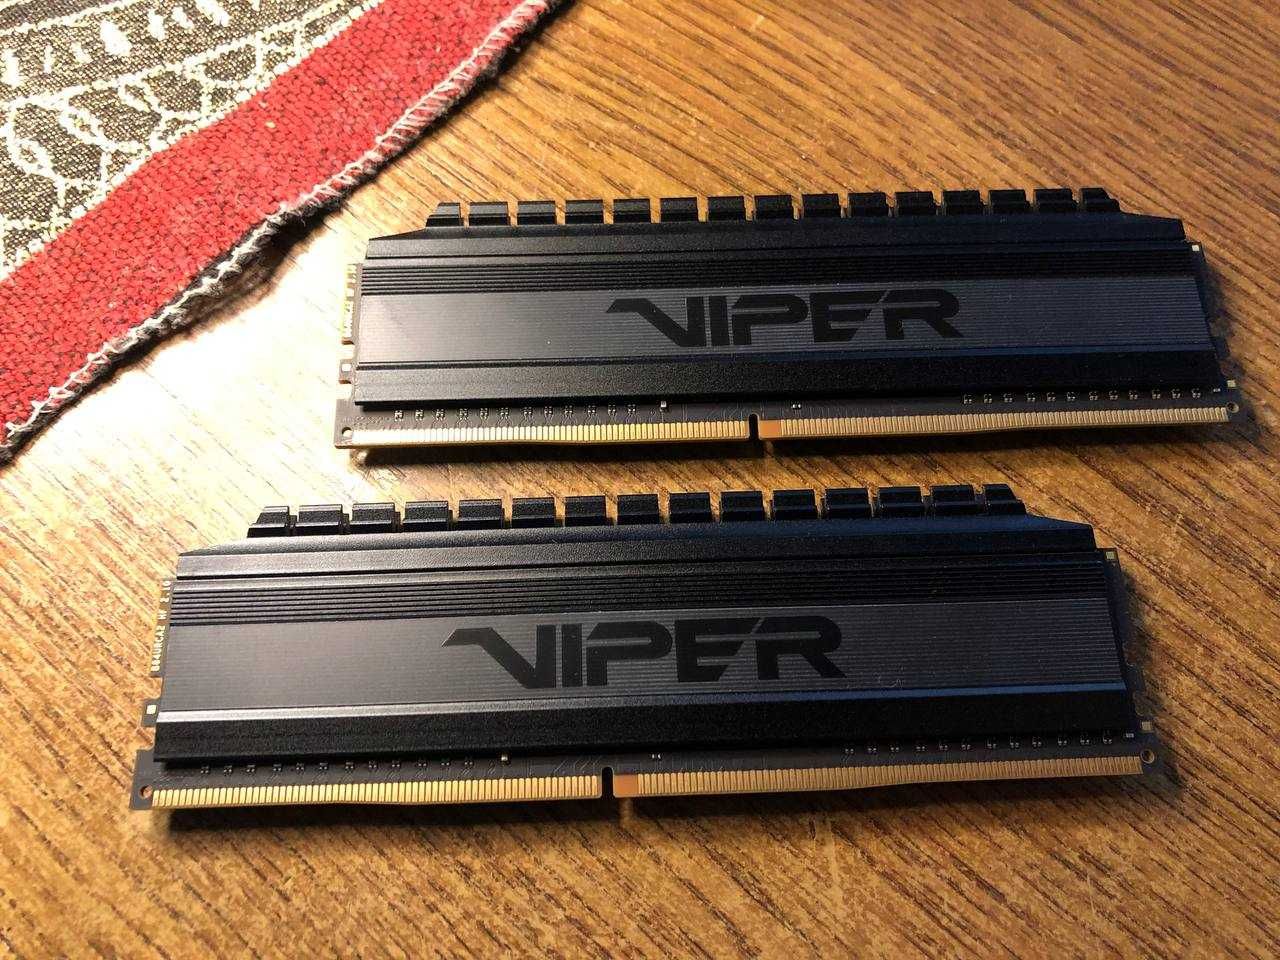 Оперативная память PATRIOT Viper4 DDR4 16GB (2x8G) 3600MHz CL18